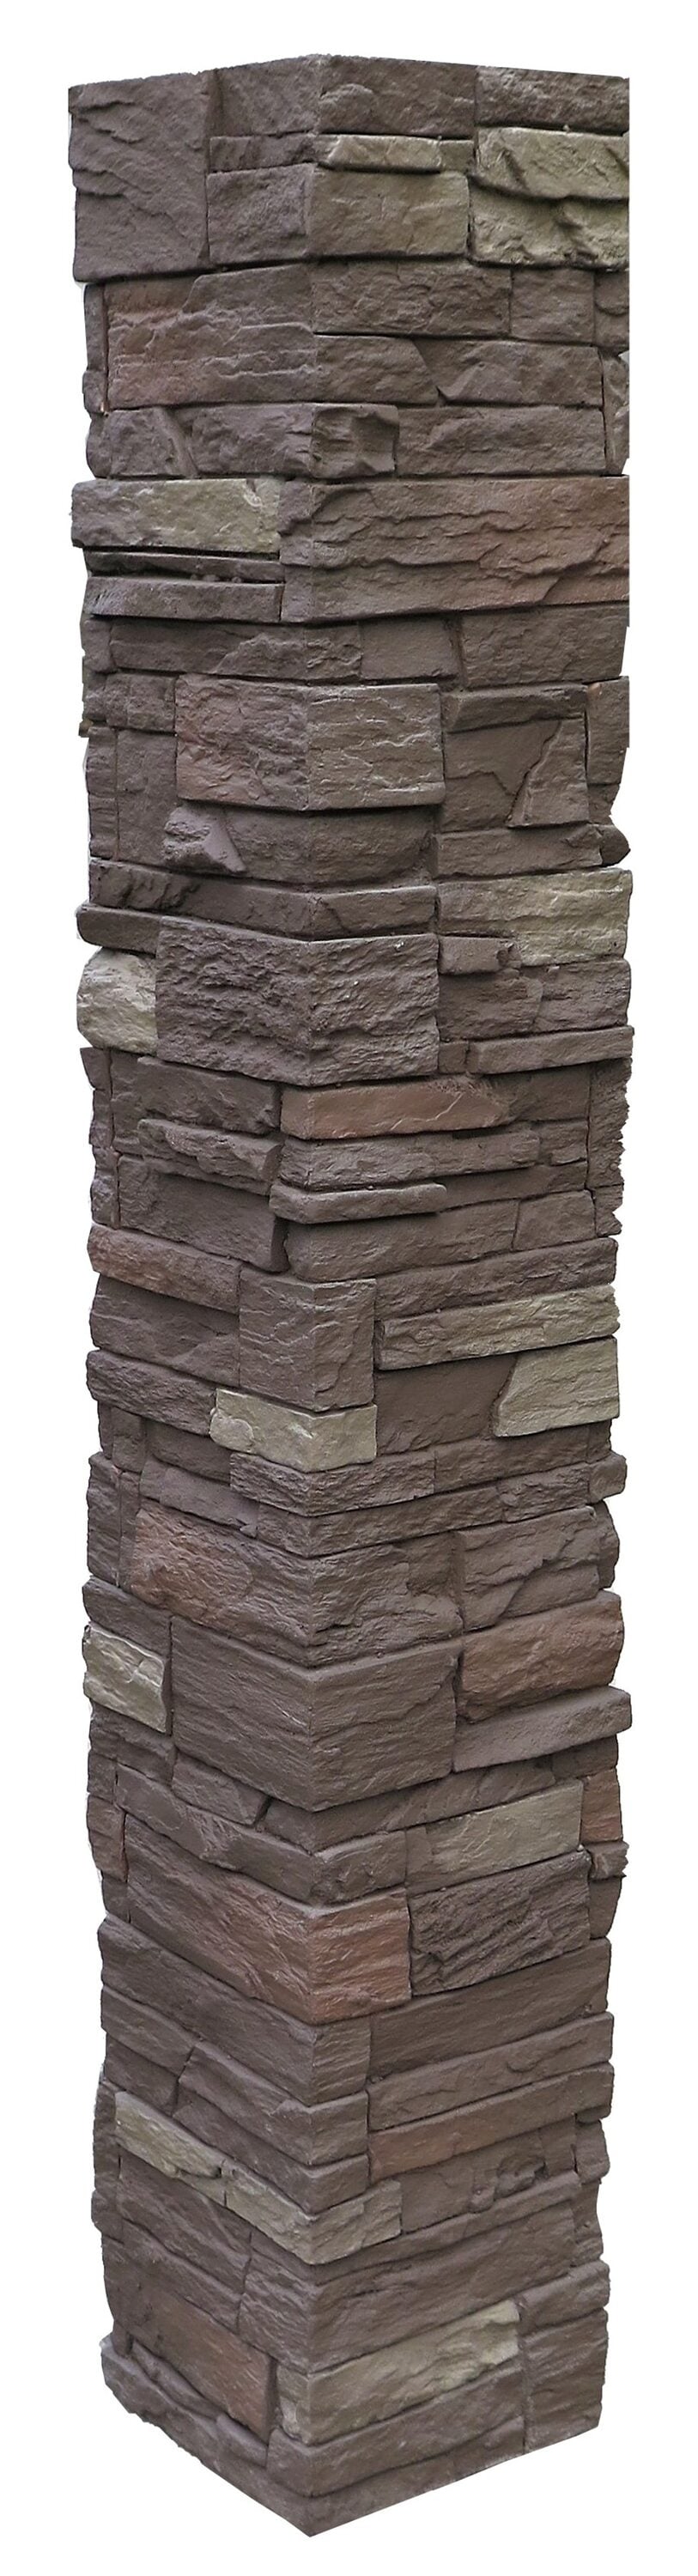 Basement Pole Wraps - Jack Post & Lally Column Covers I Elite